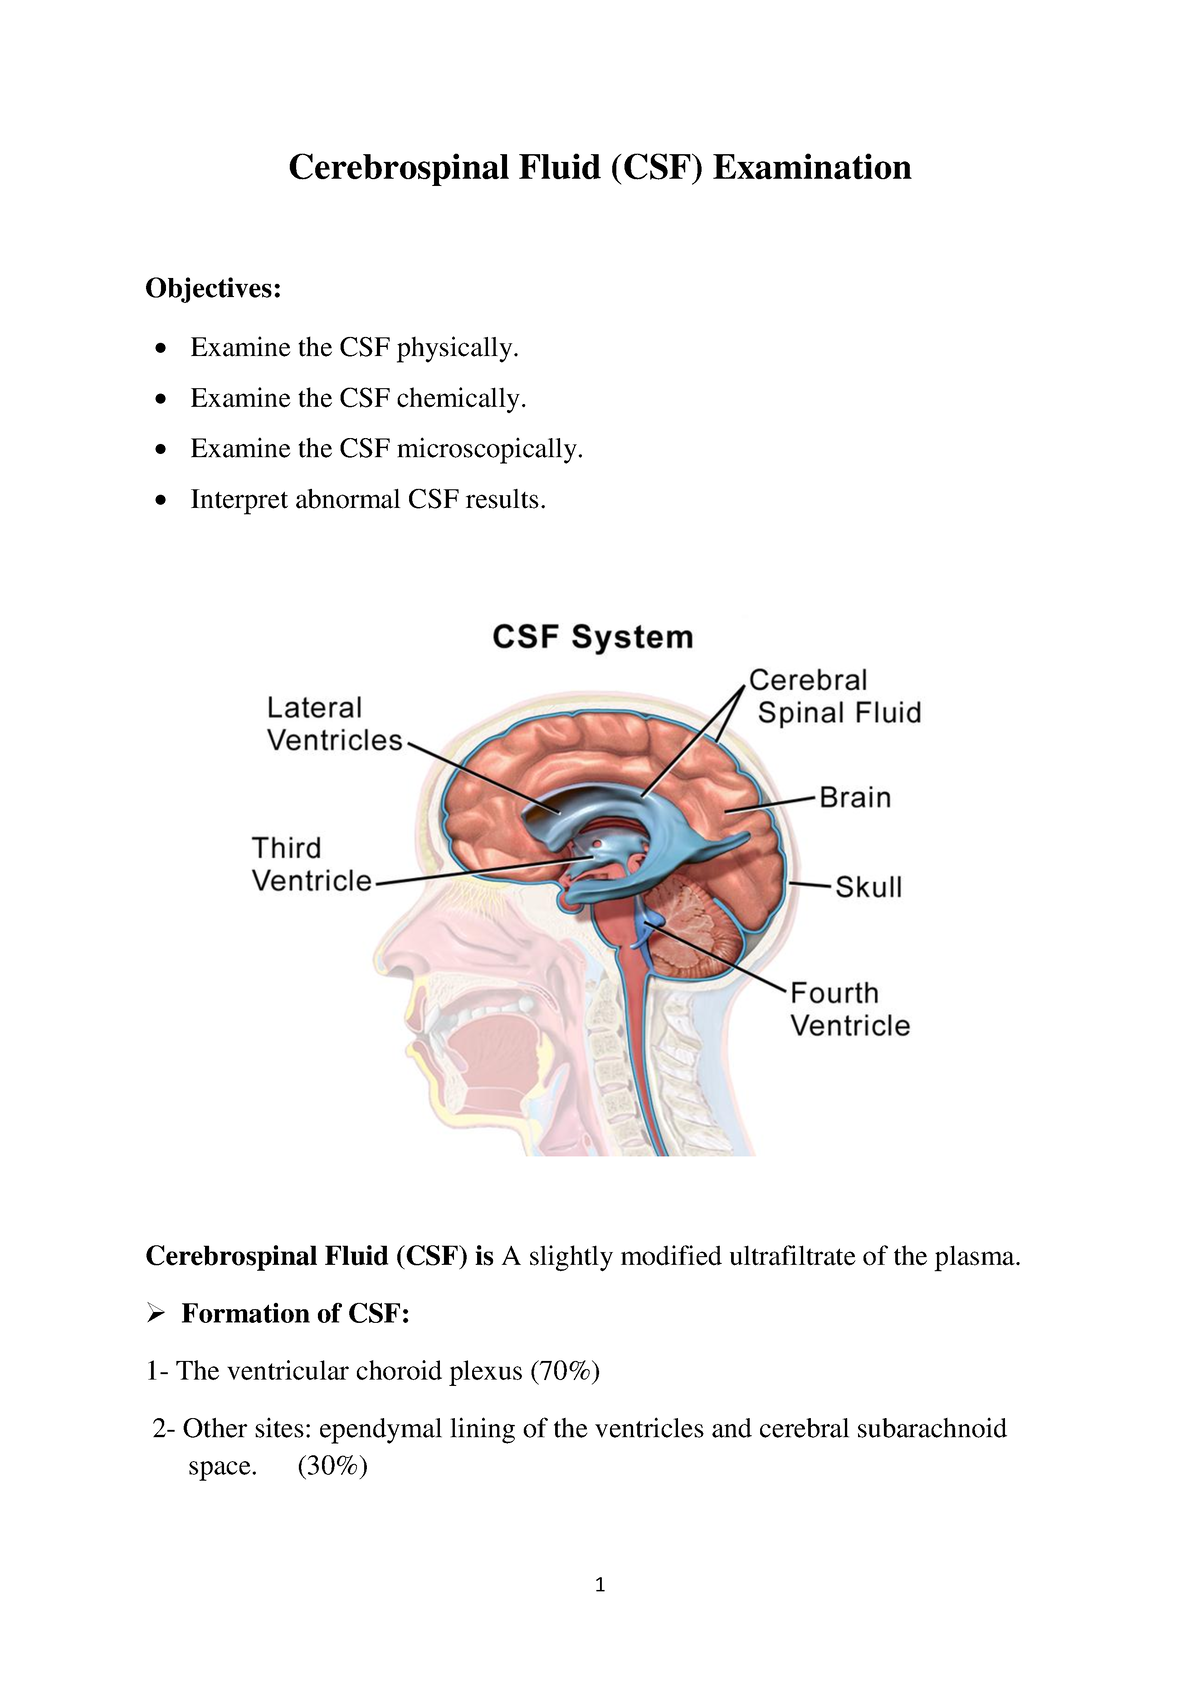 Cerebrospinal Fluid Examination Cerebrospinal Fluid Csf Examination Objectives Examine The 6523